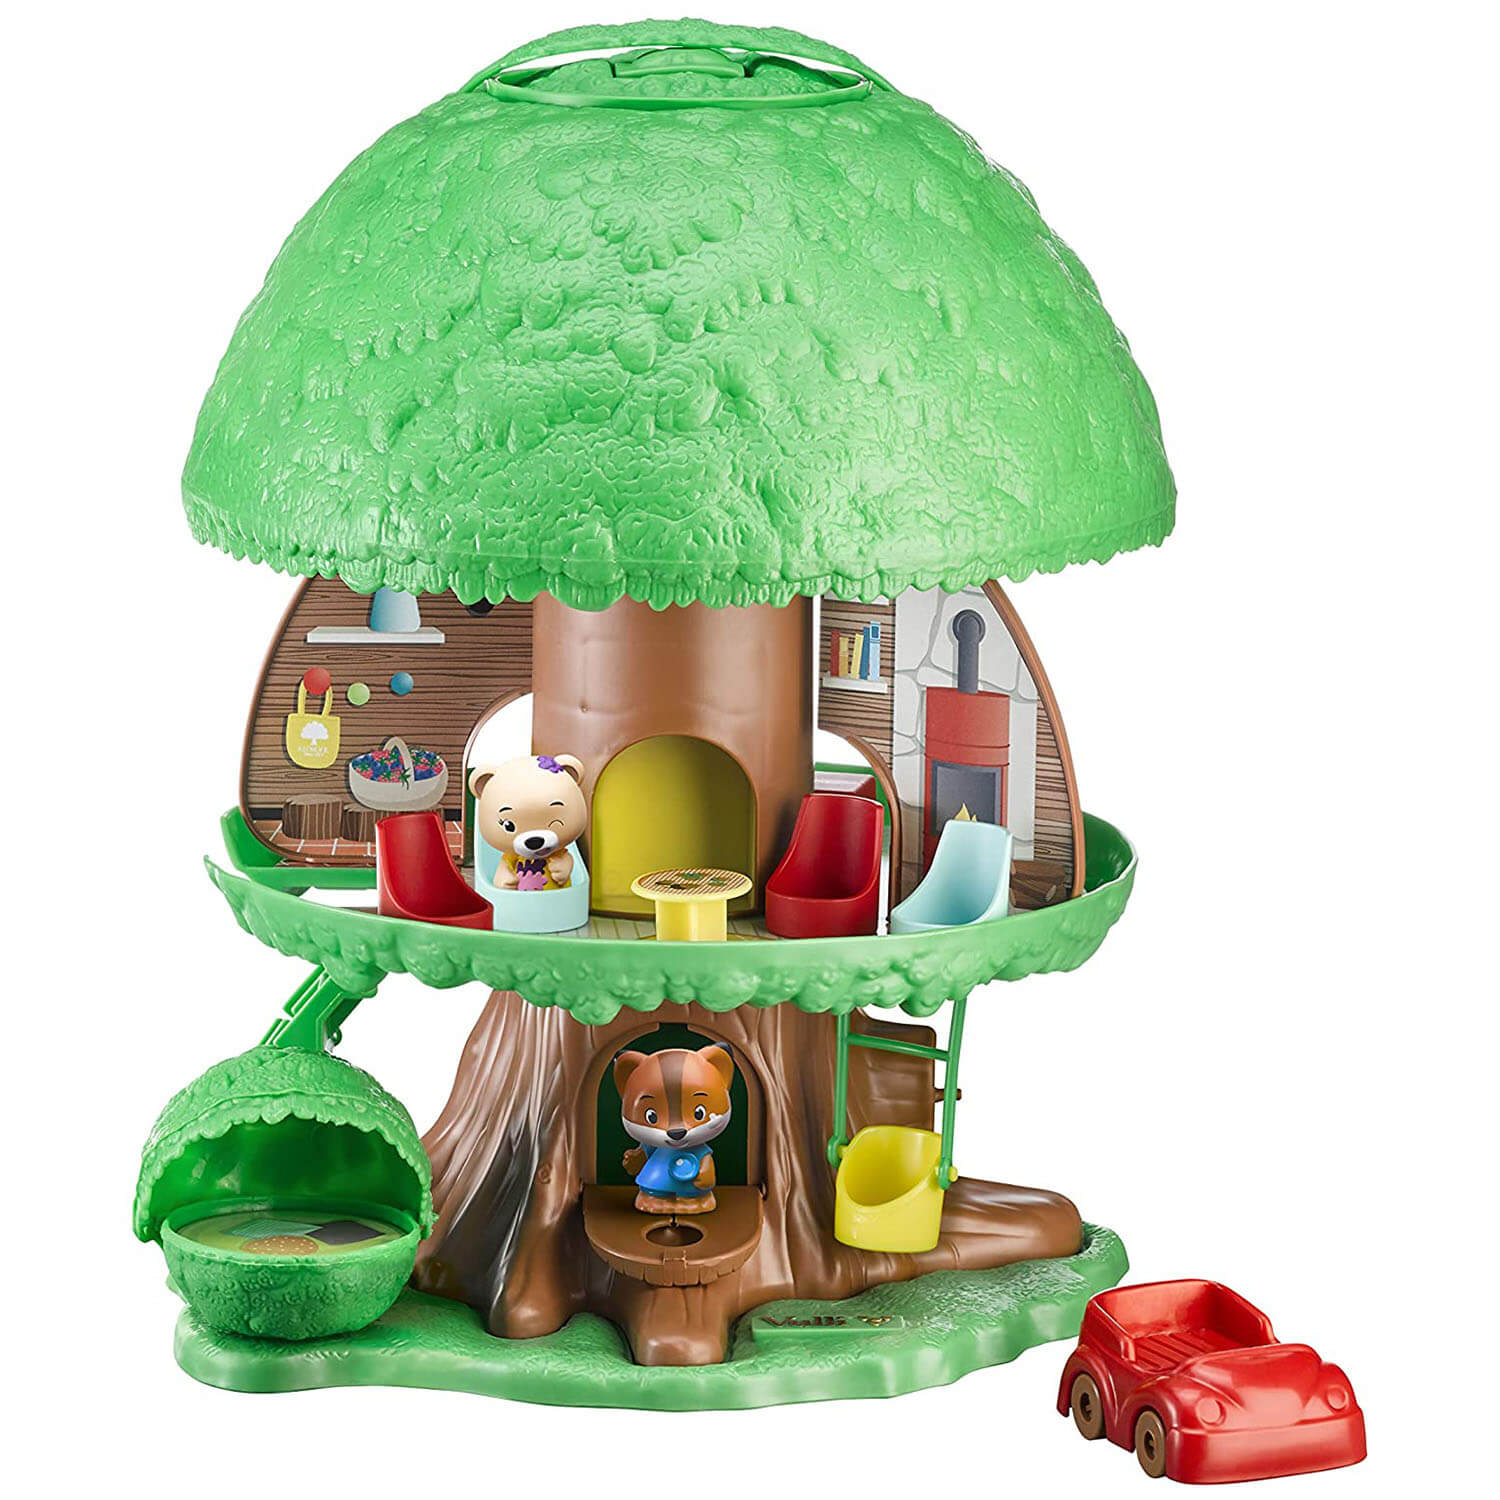 Fat Brain Toys Timber Tots Magic Tree House Playset